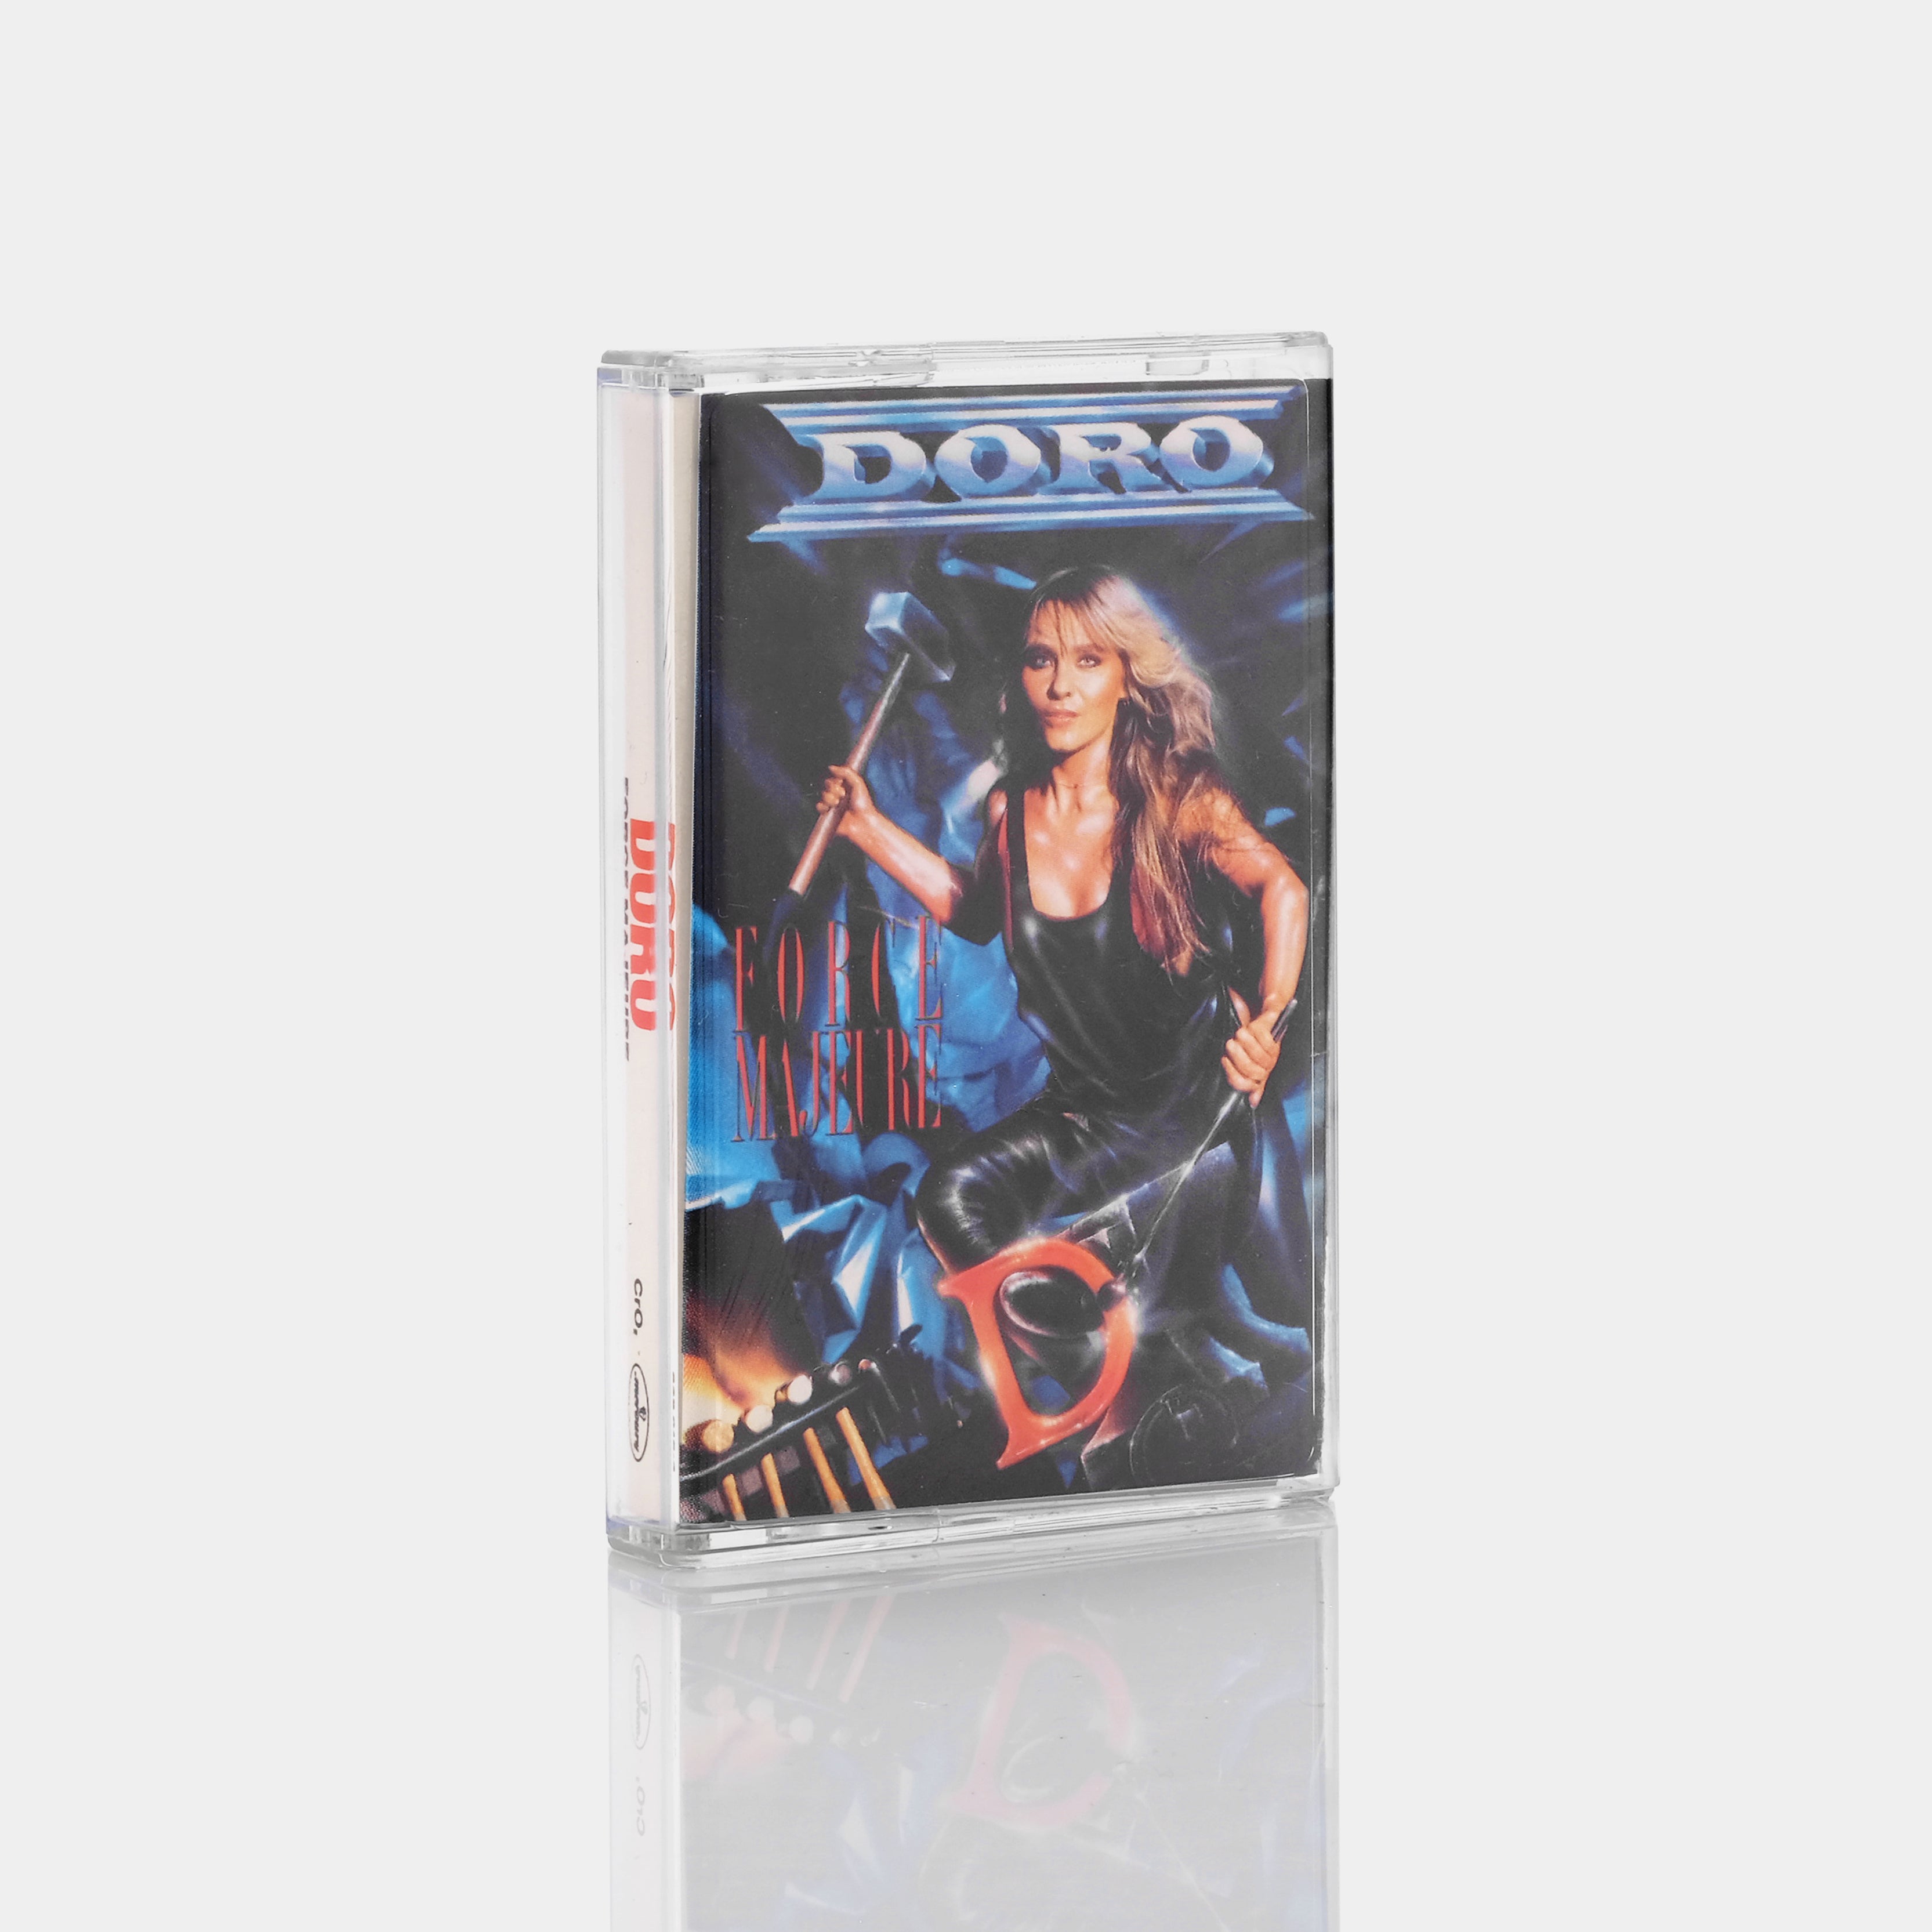 Doro - Force Majeure Cassette Tape